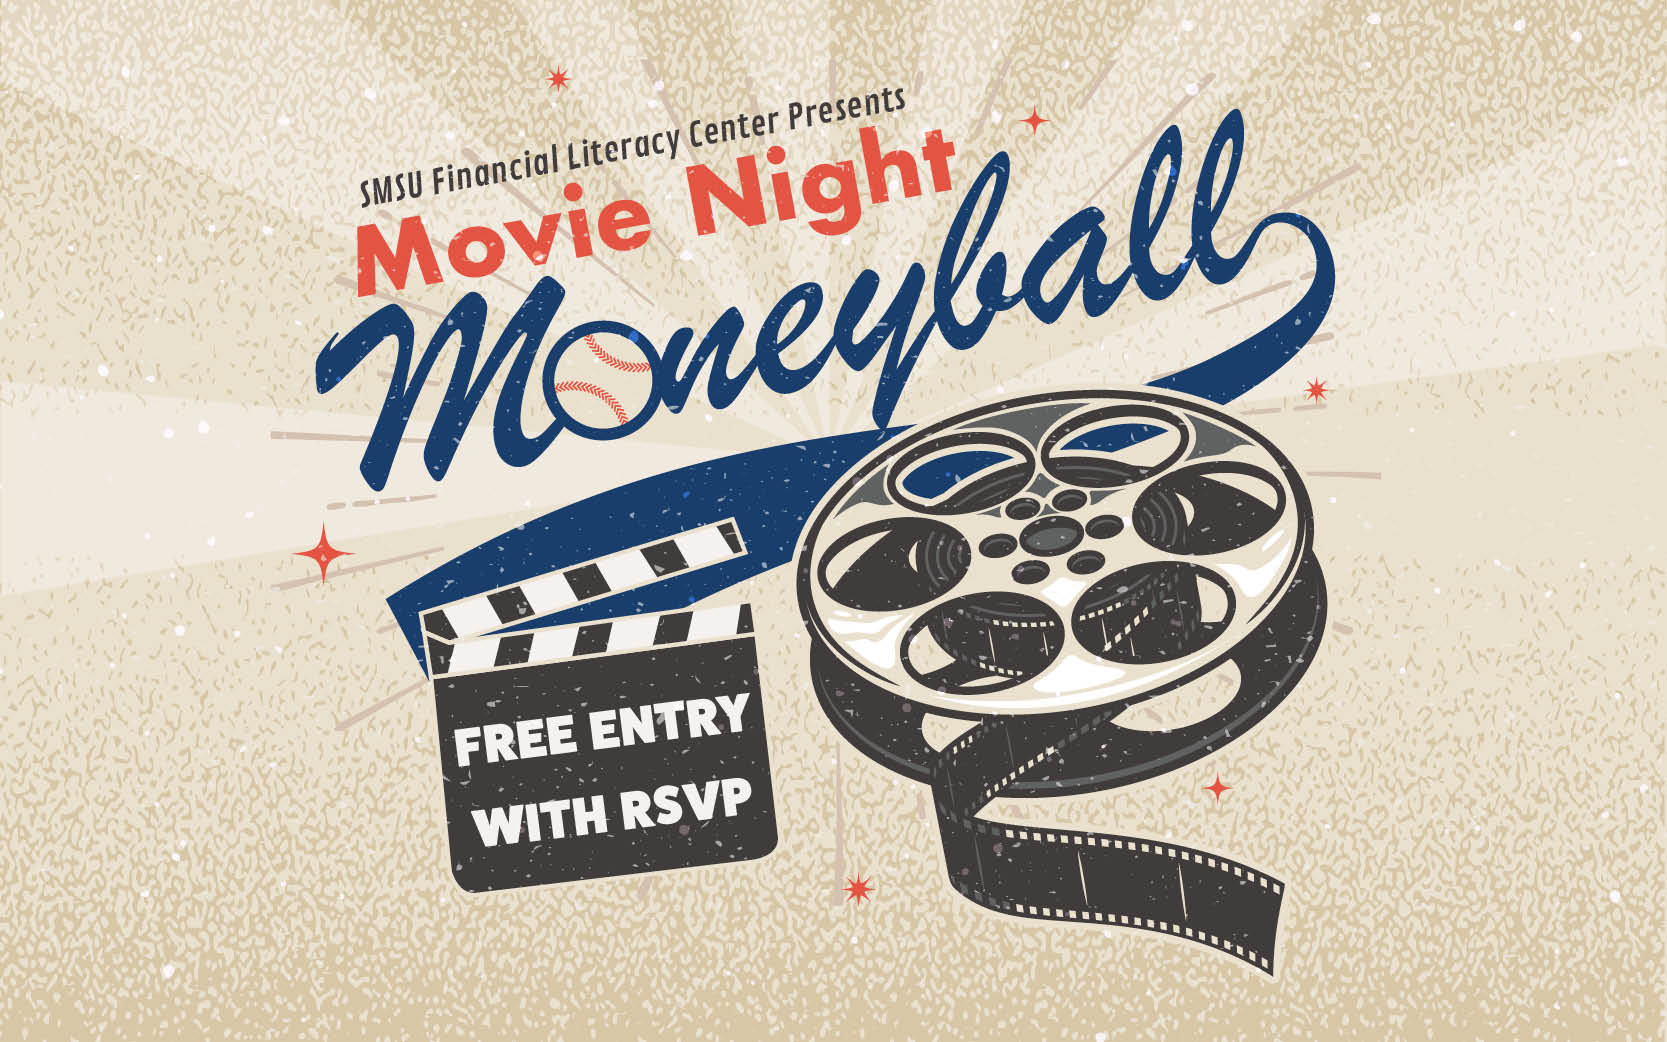 SMSU Financial Literacy Center Presents Movie Night Moneyball (Free Entry with RSVP)